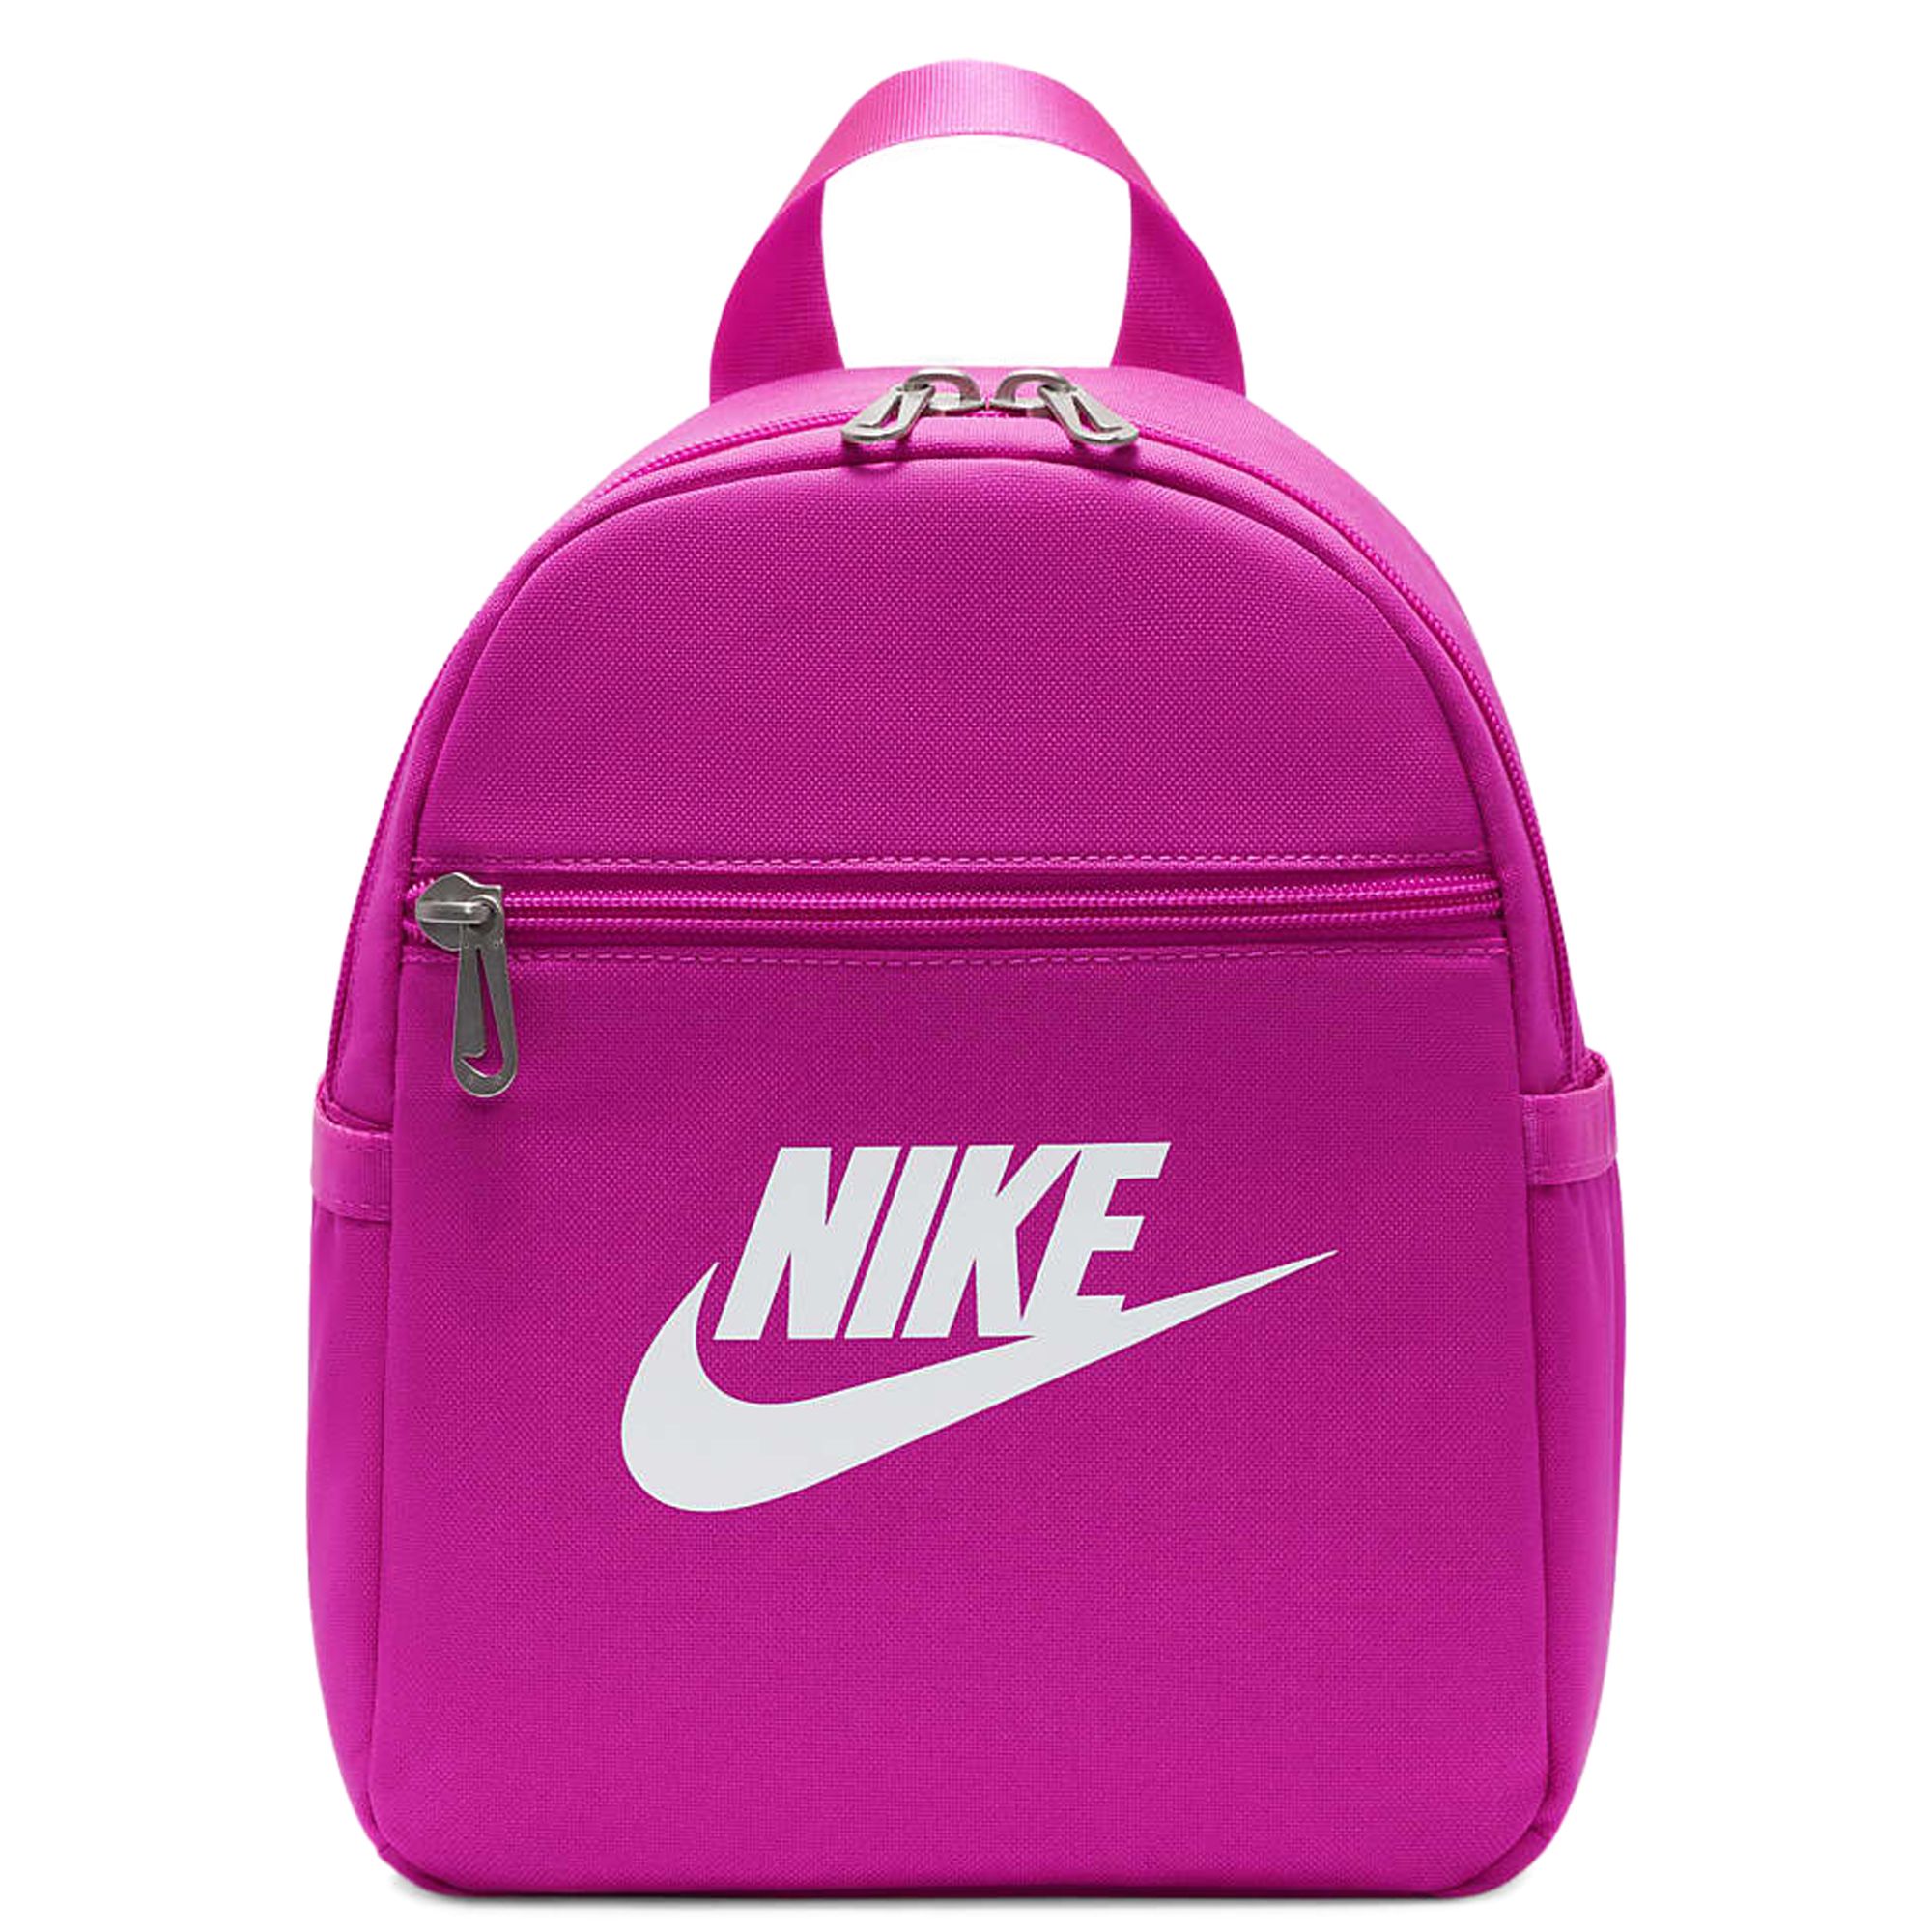 NIKE portswear Futura 365 Mini Backpack (6L) CW9301 617 - Shiekh